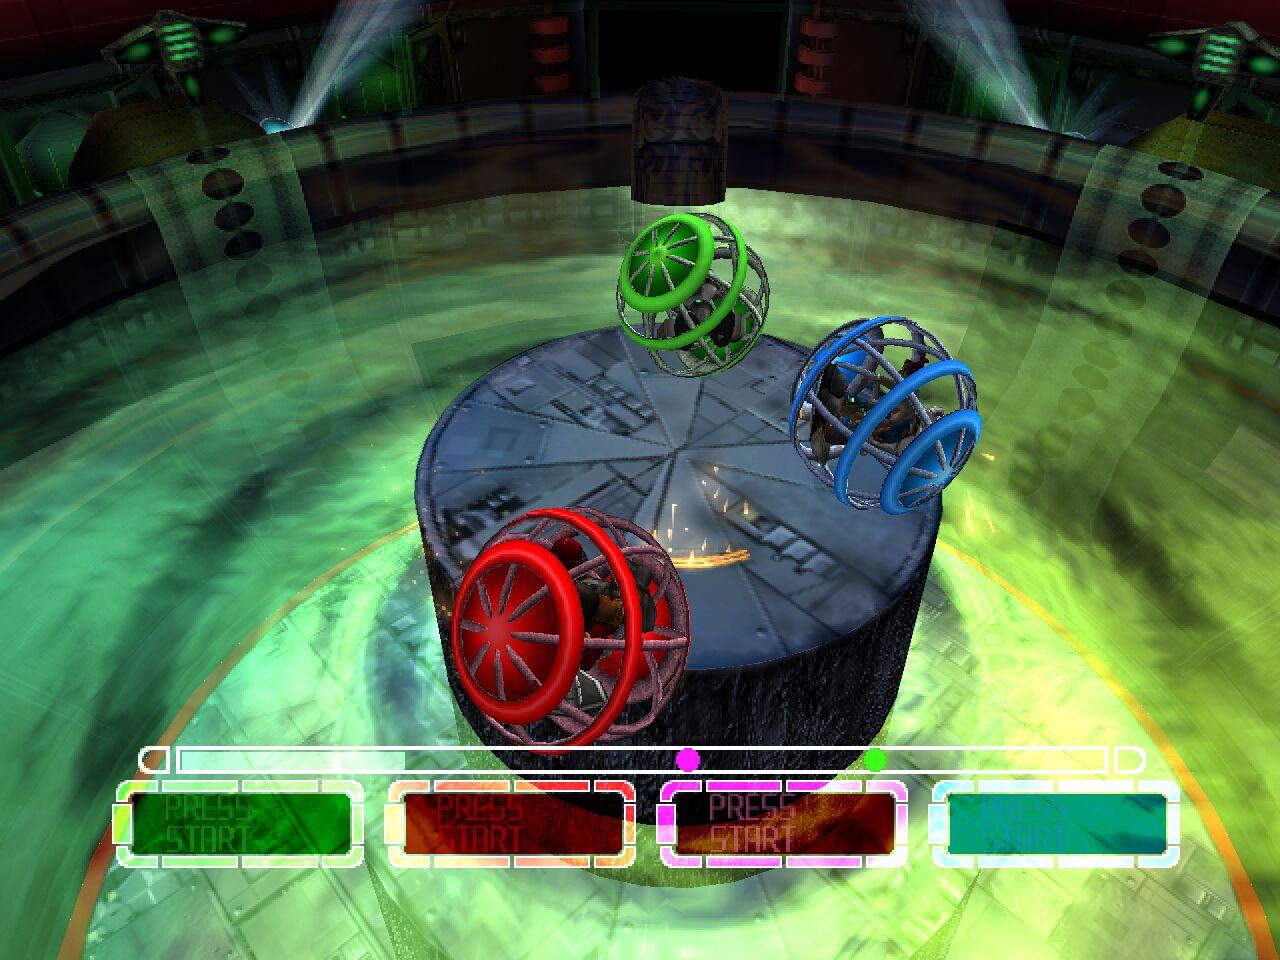 Giftig hoop kijk in Fuzion Frenzy 2 confirmed | GamesRadar+